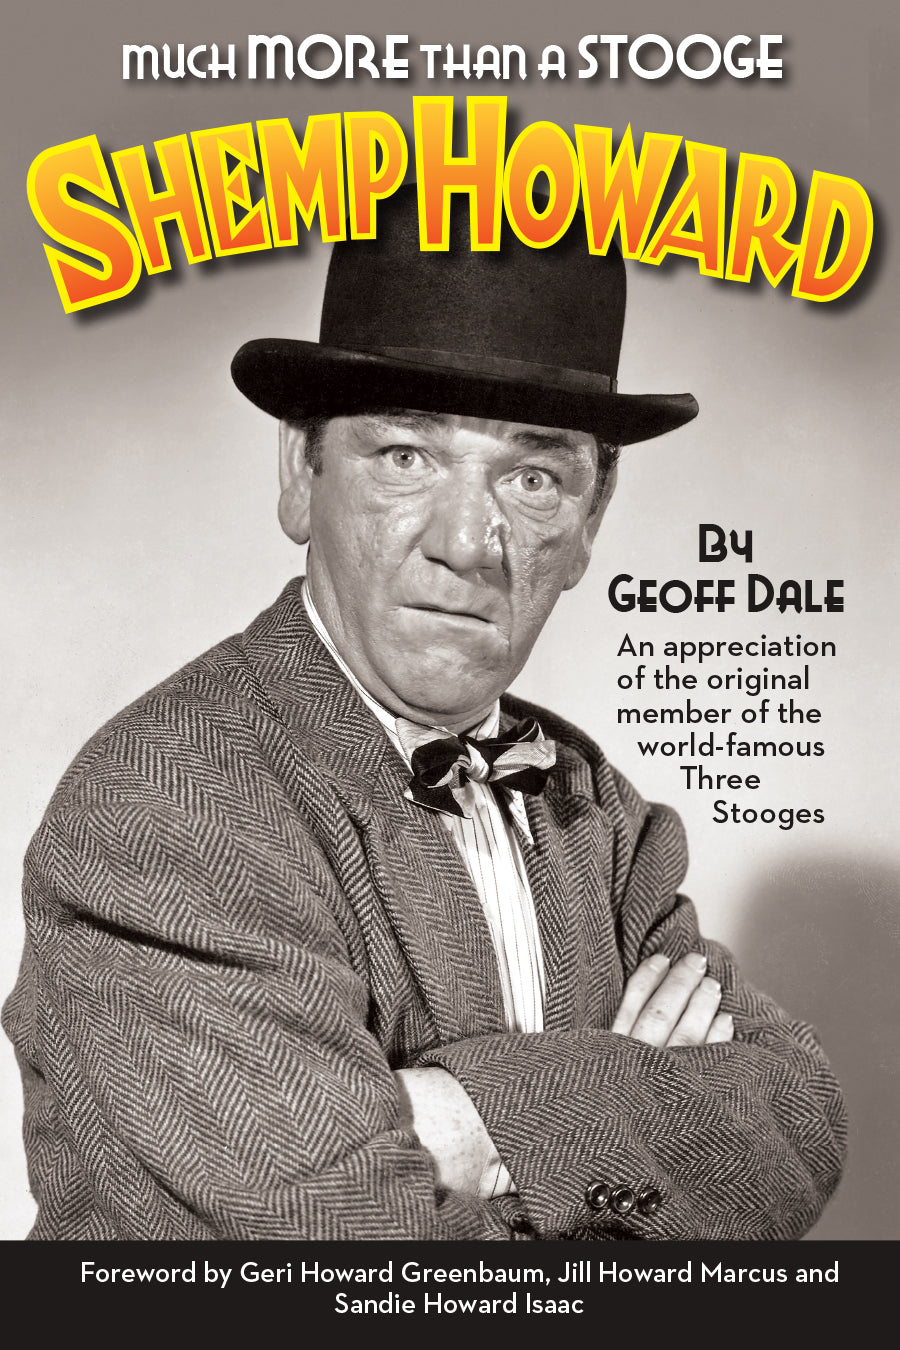 Much More Than A Stooge: Shemp Howard (hardback)